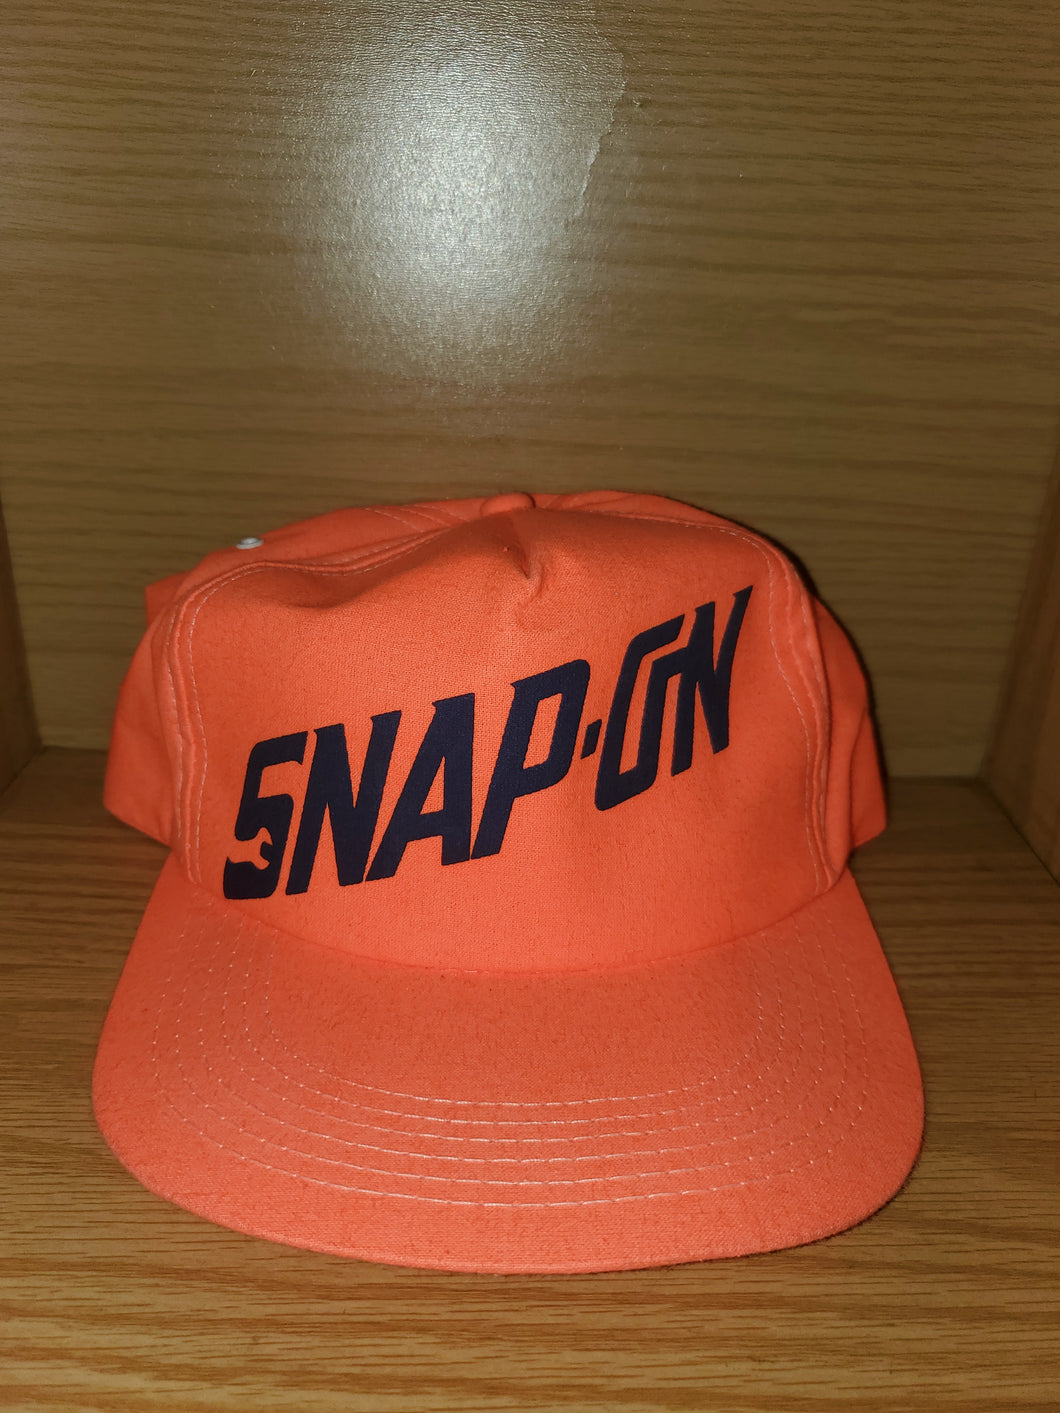 Vintage Snap-On Hat